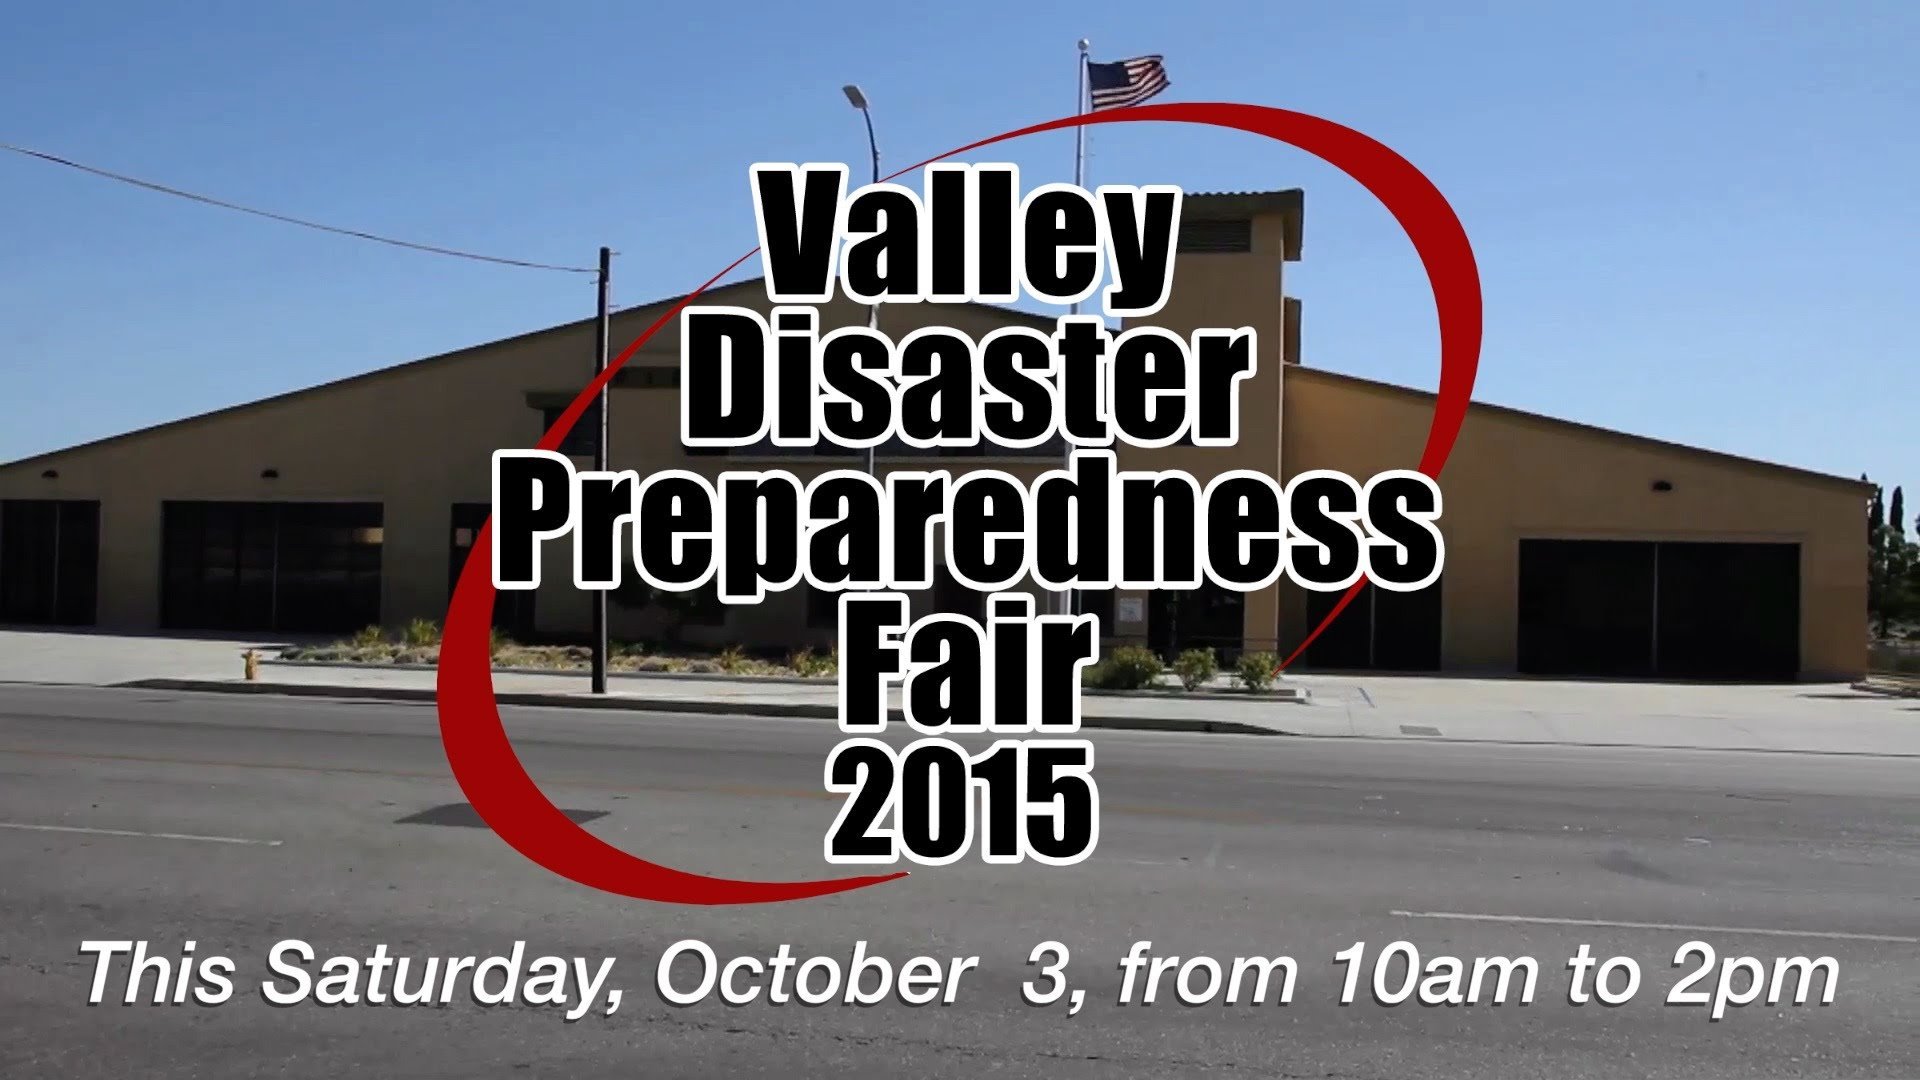 Valley Disaster Preparedness Fair: This Saturday